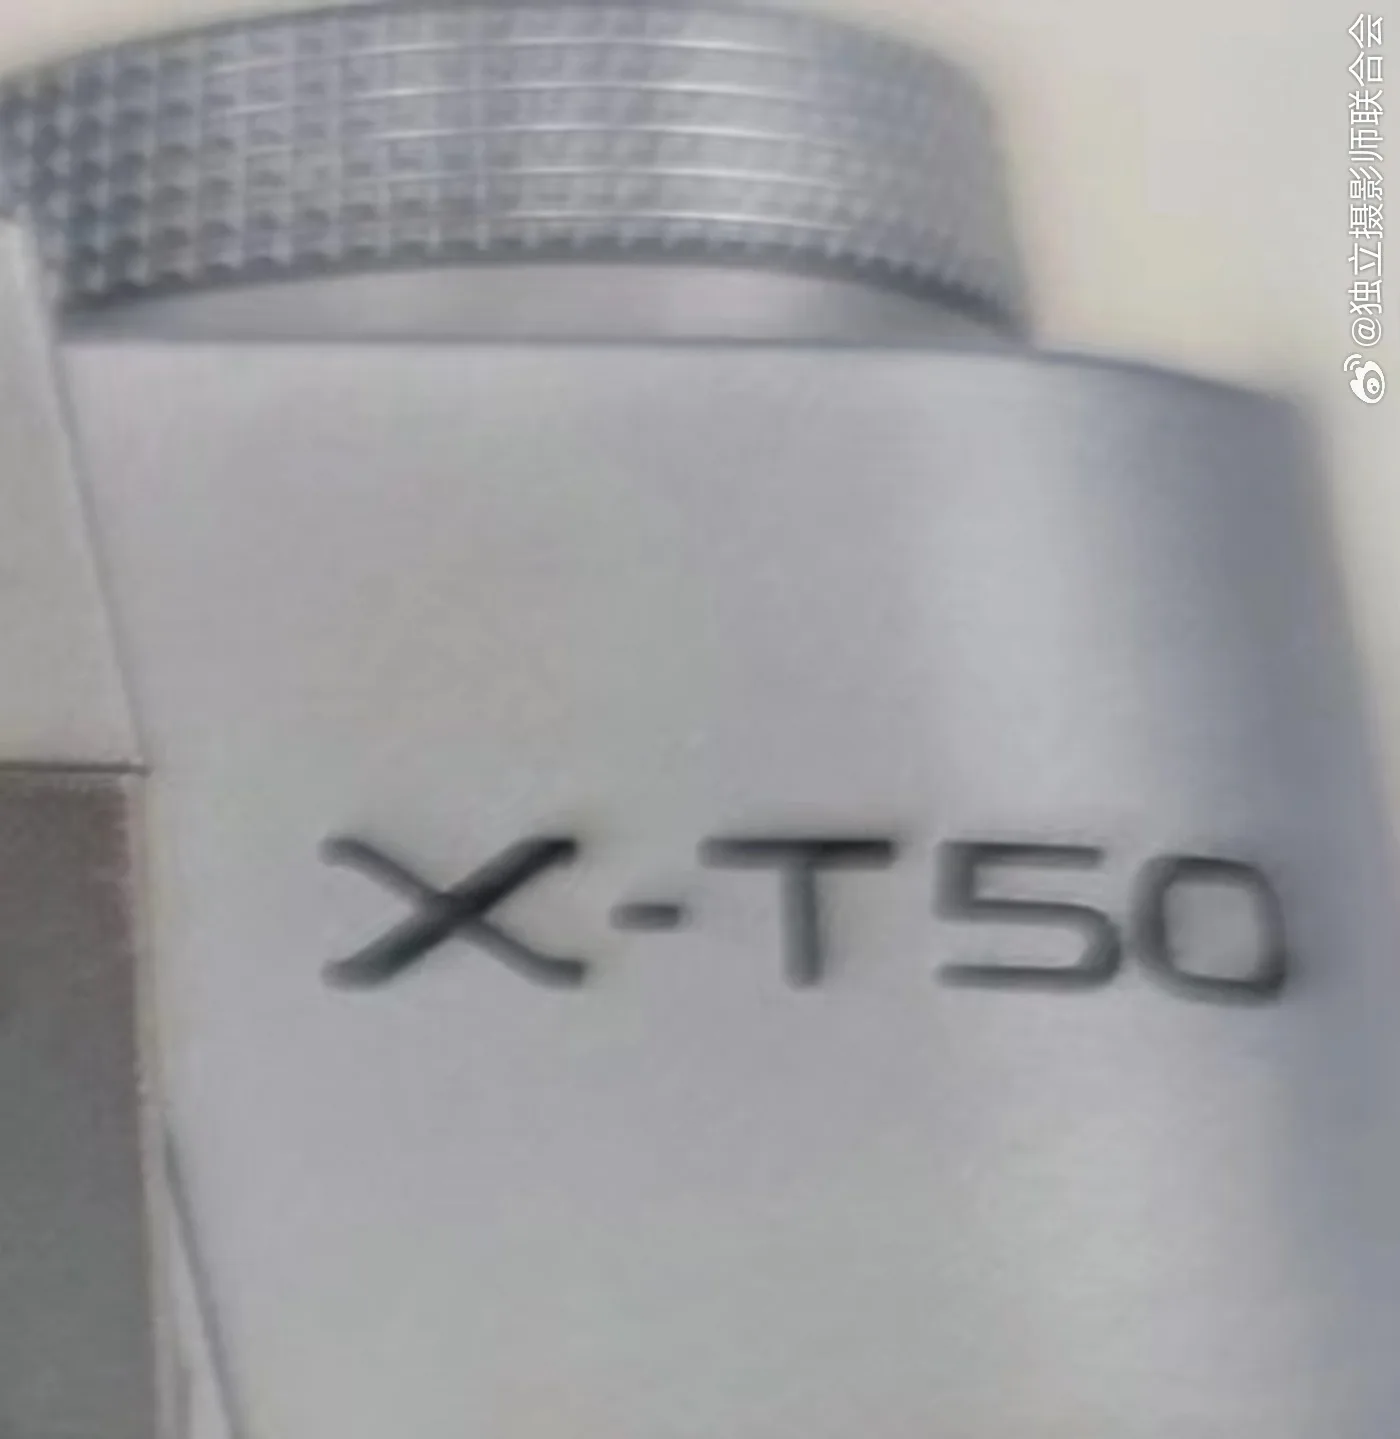 Fujifilm X T50 camera